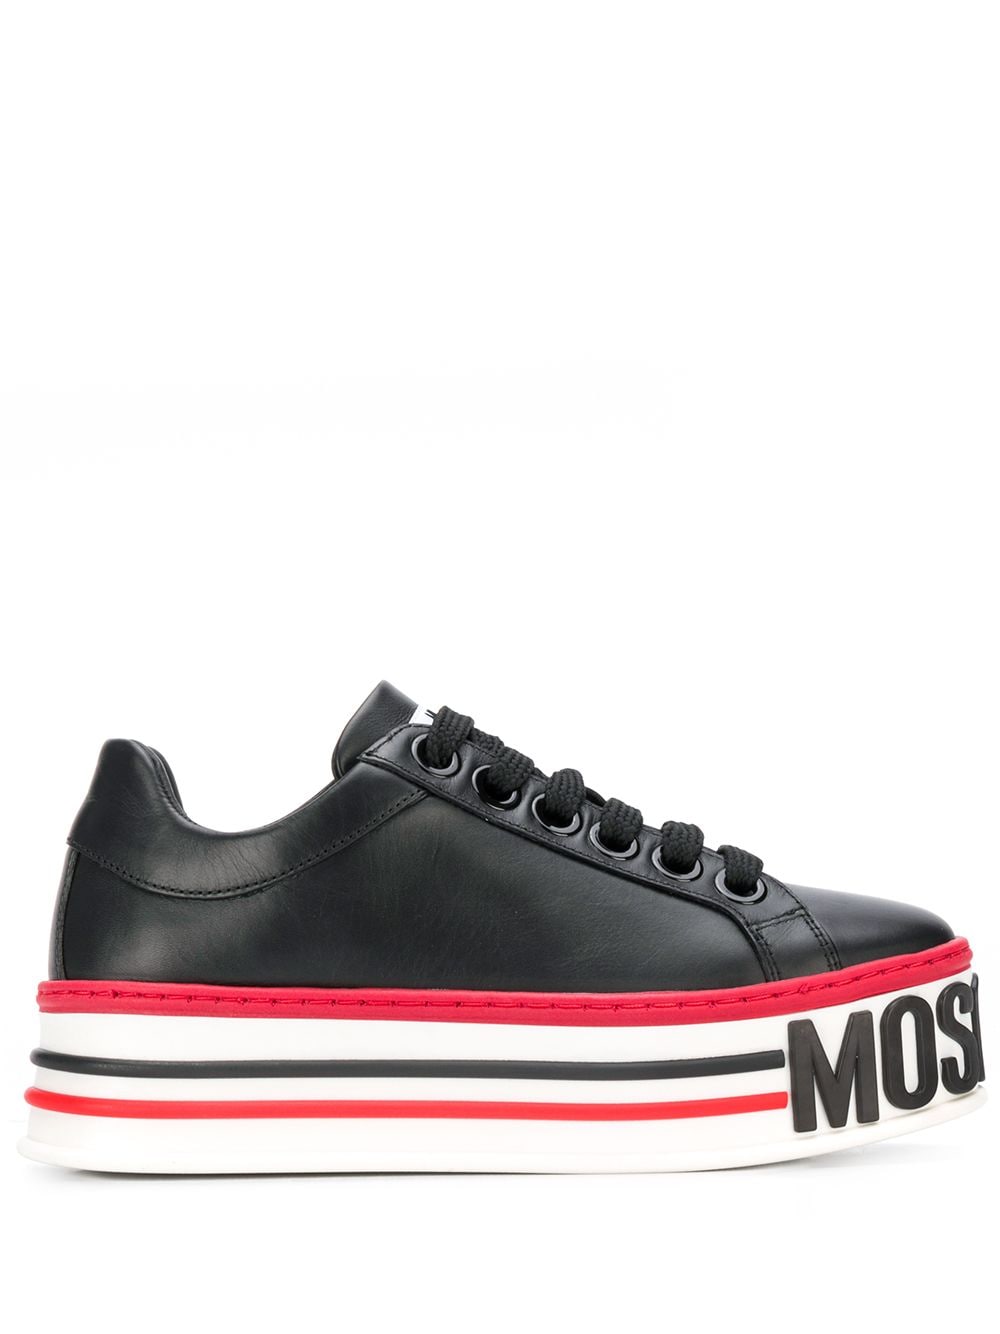 фото Moschino кроссовки на платформе с логотипом